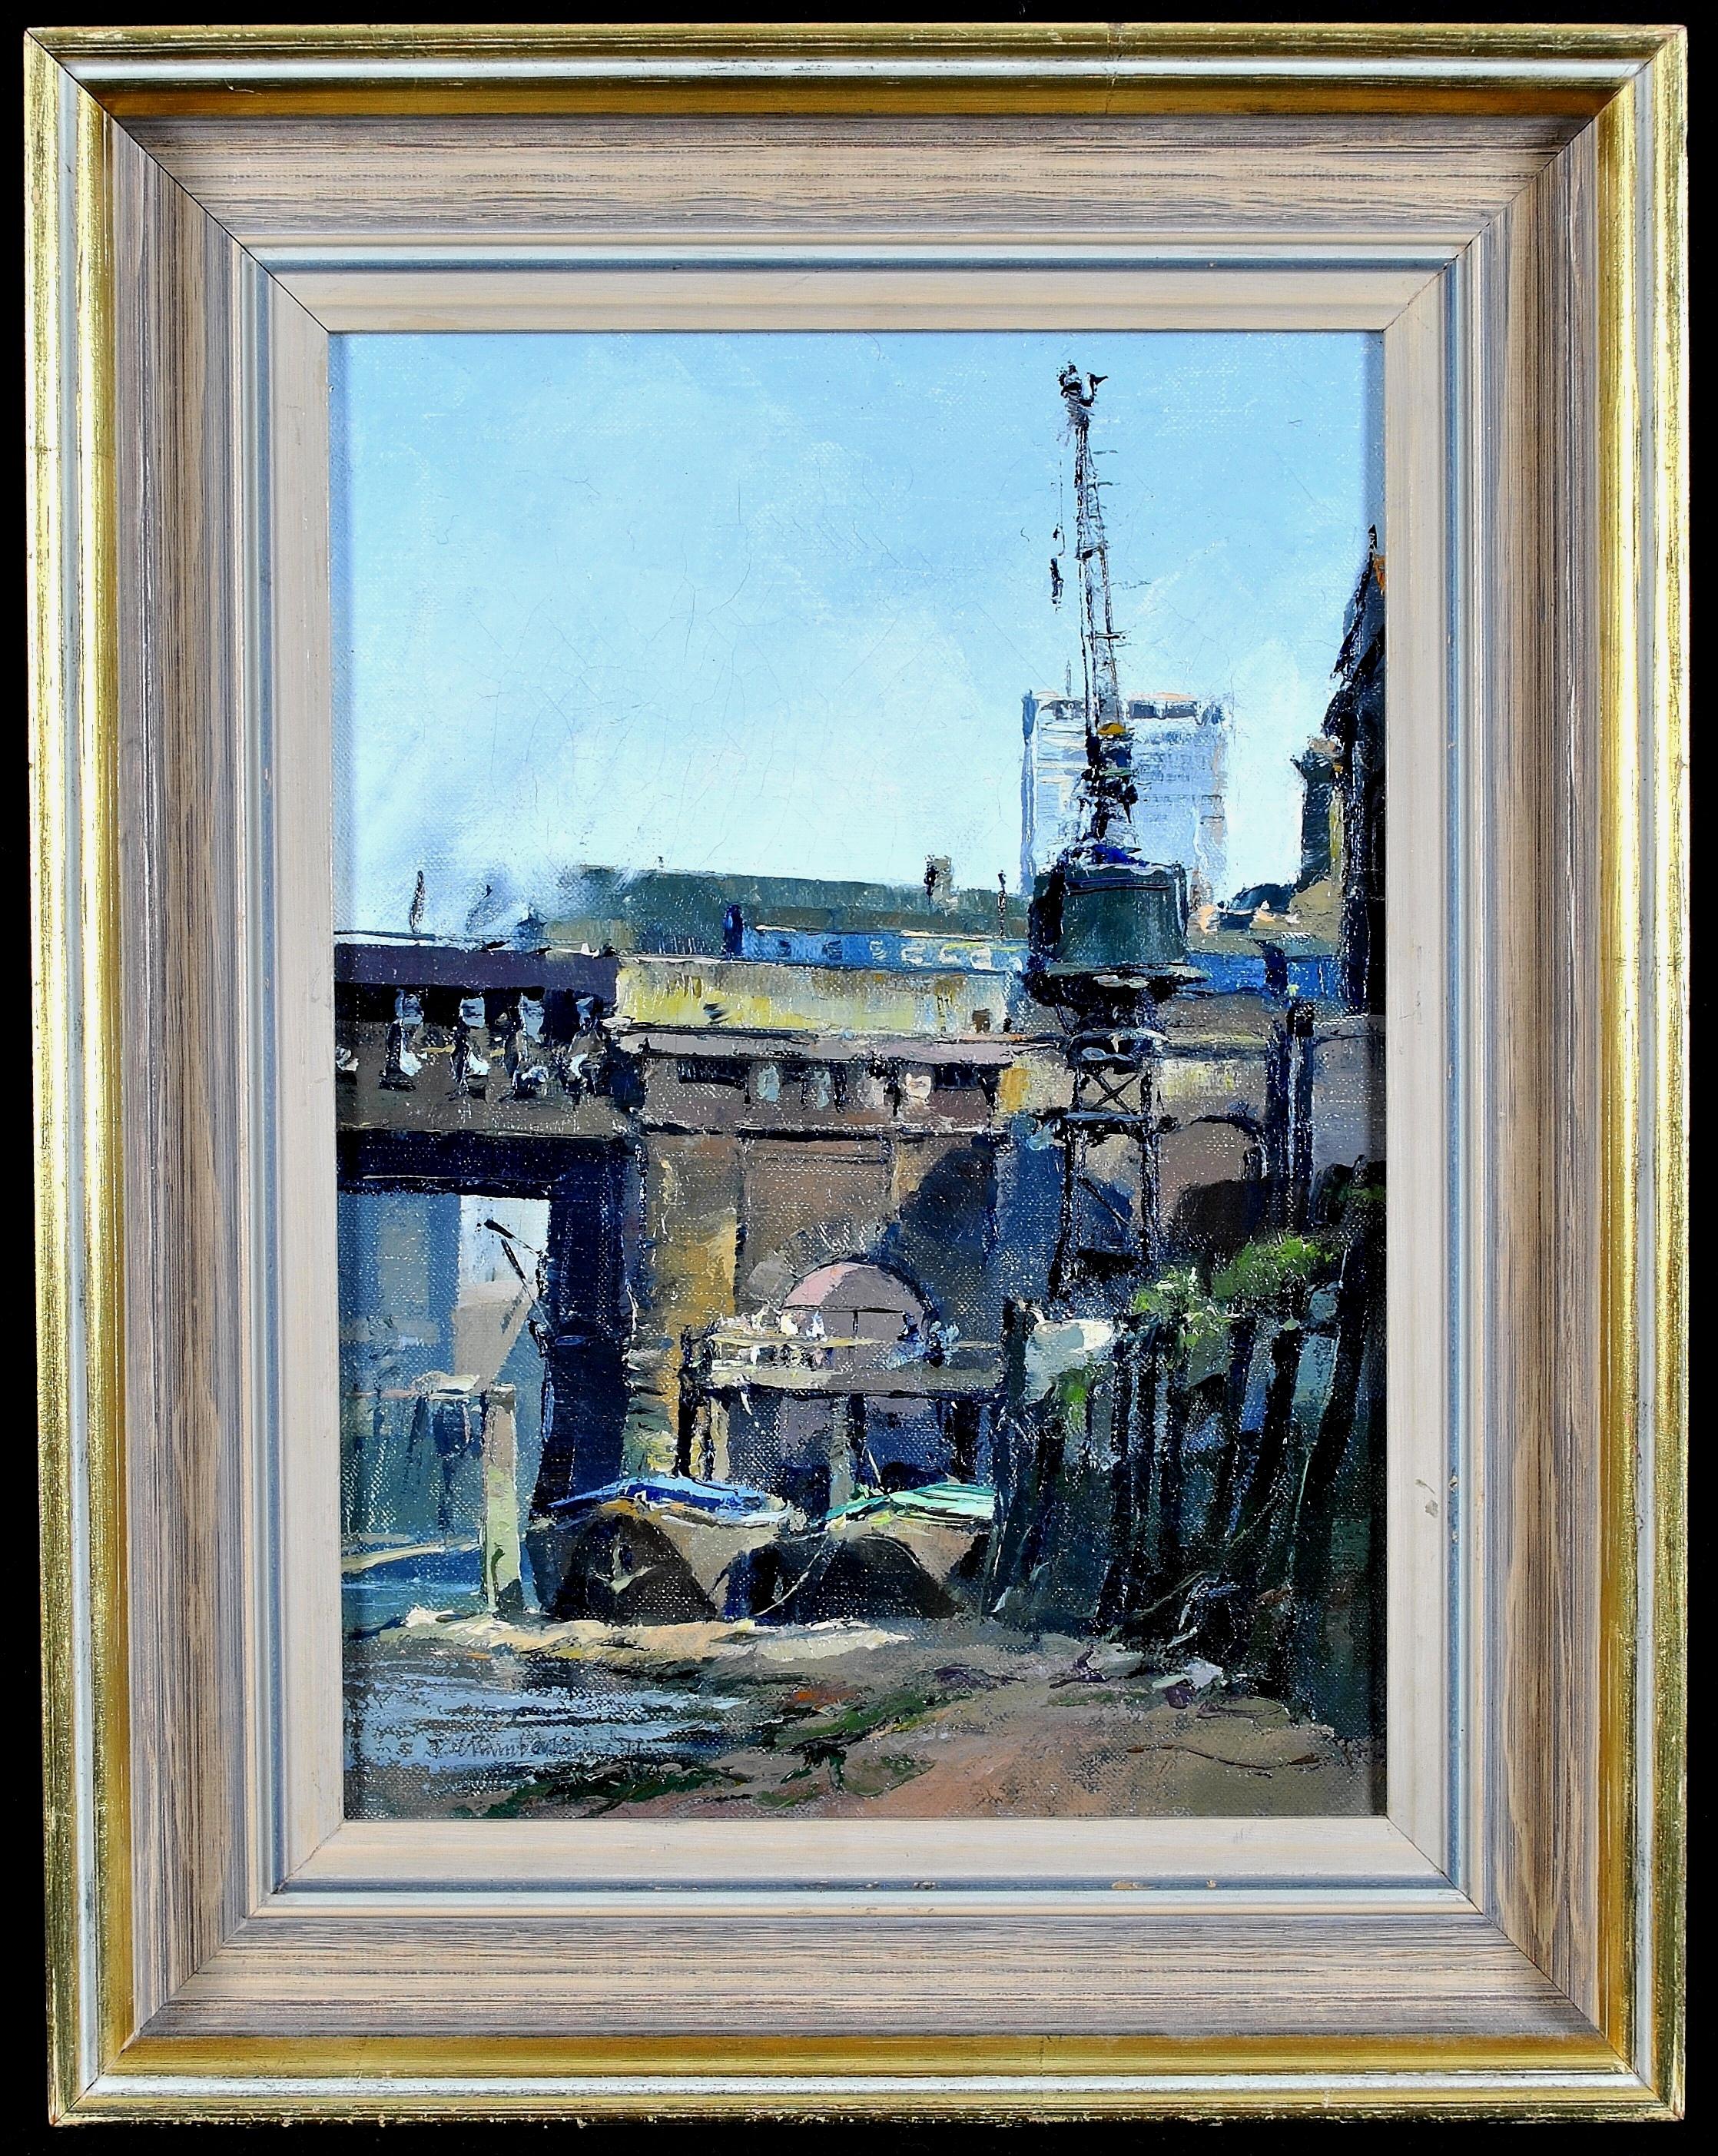 Trevor Chamberlain Landscape Painting - Under Cannon Street Bridge - London Thames River Side Oil on Canvas Painting